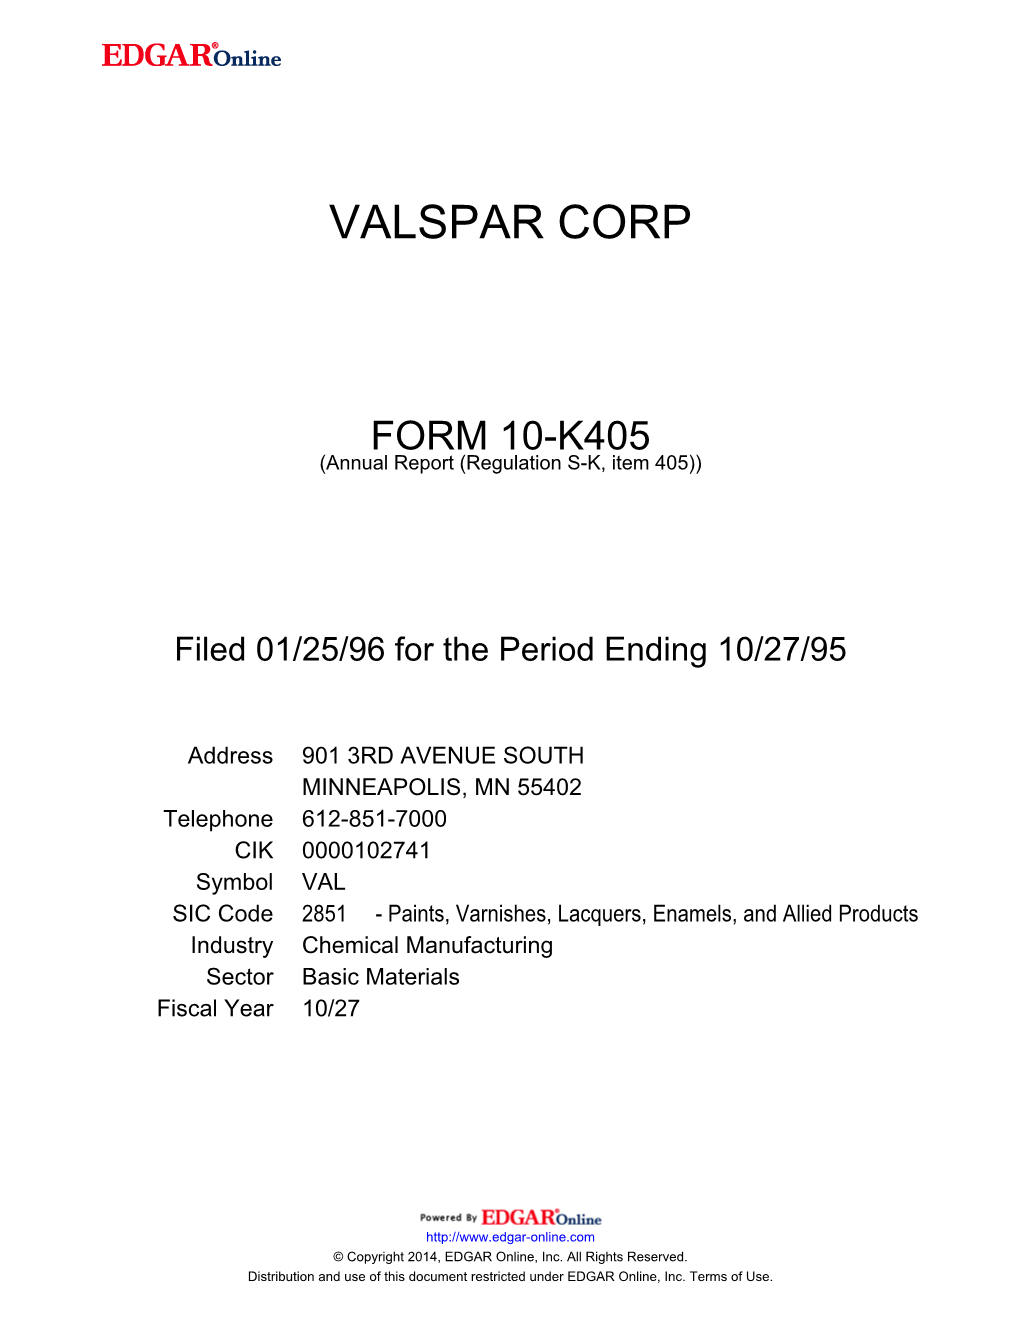 Valspar Corp